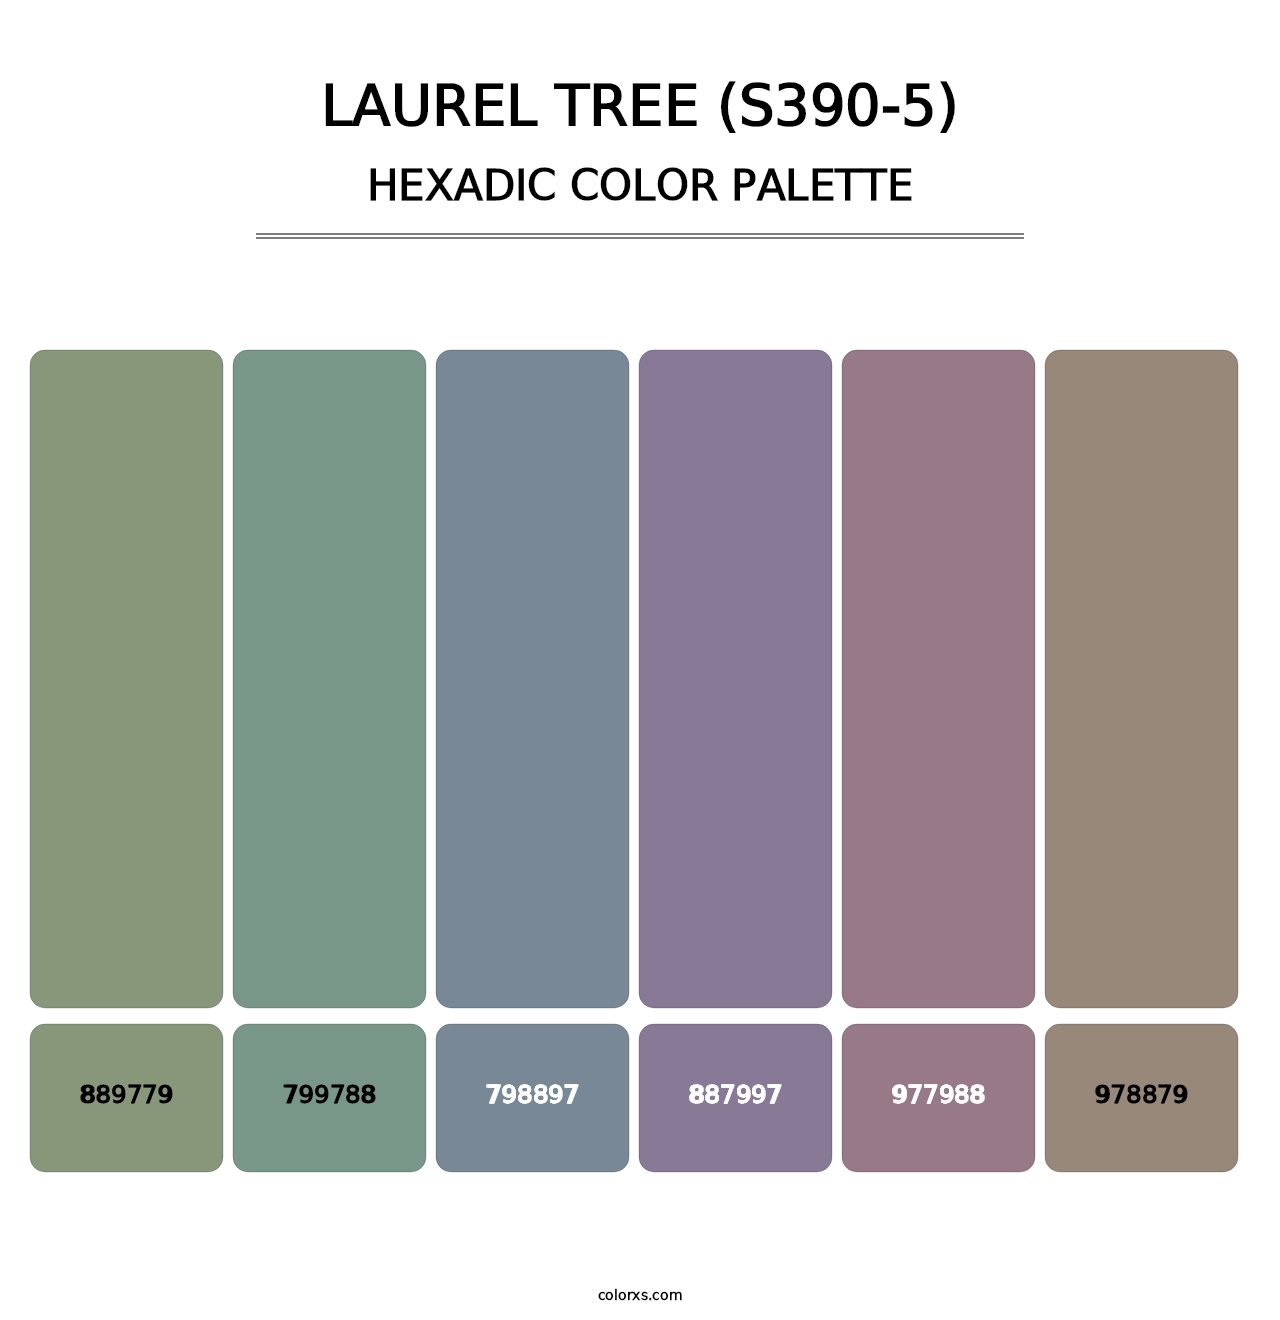 Laurel Tree (S390-5) - Hexadic Color Palette